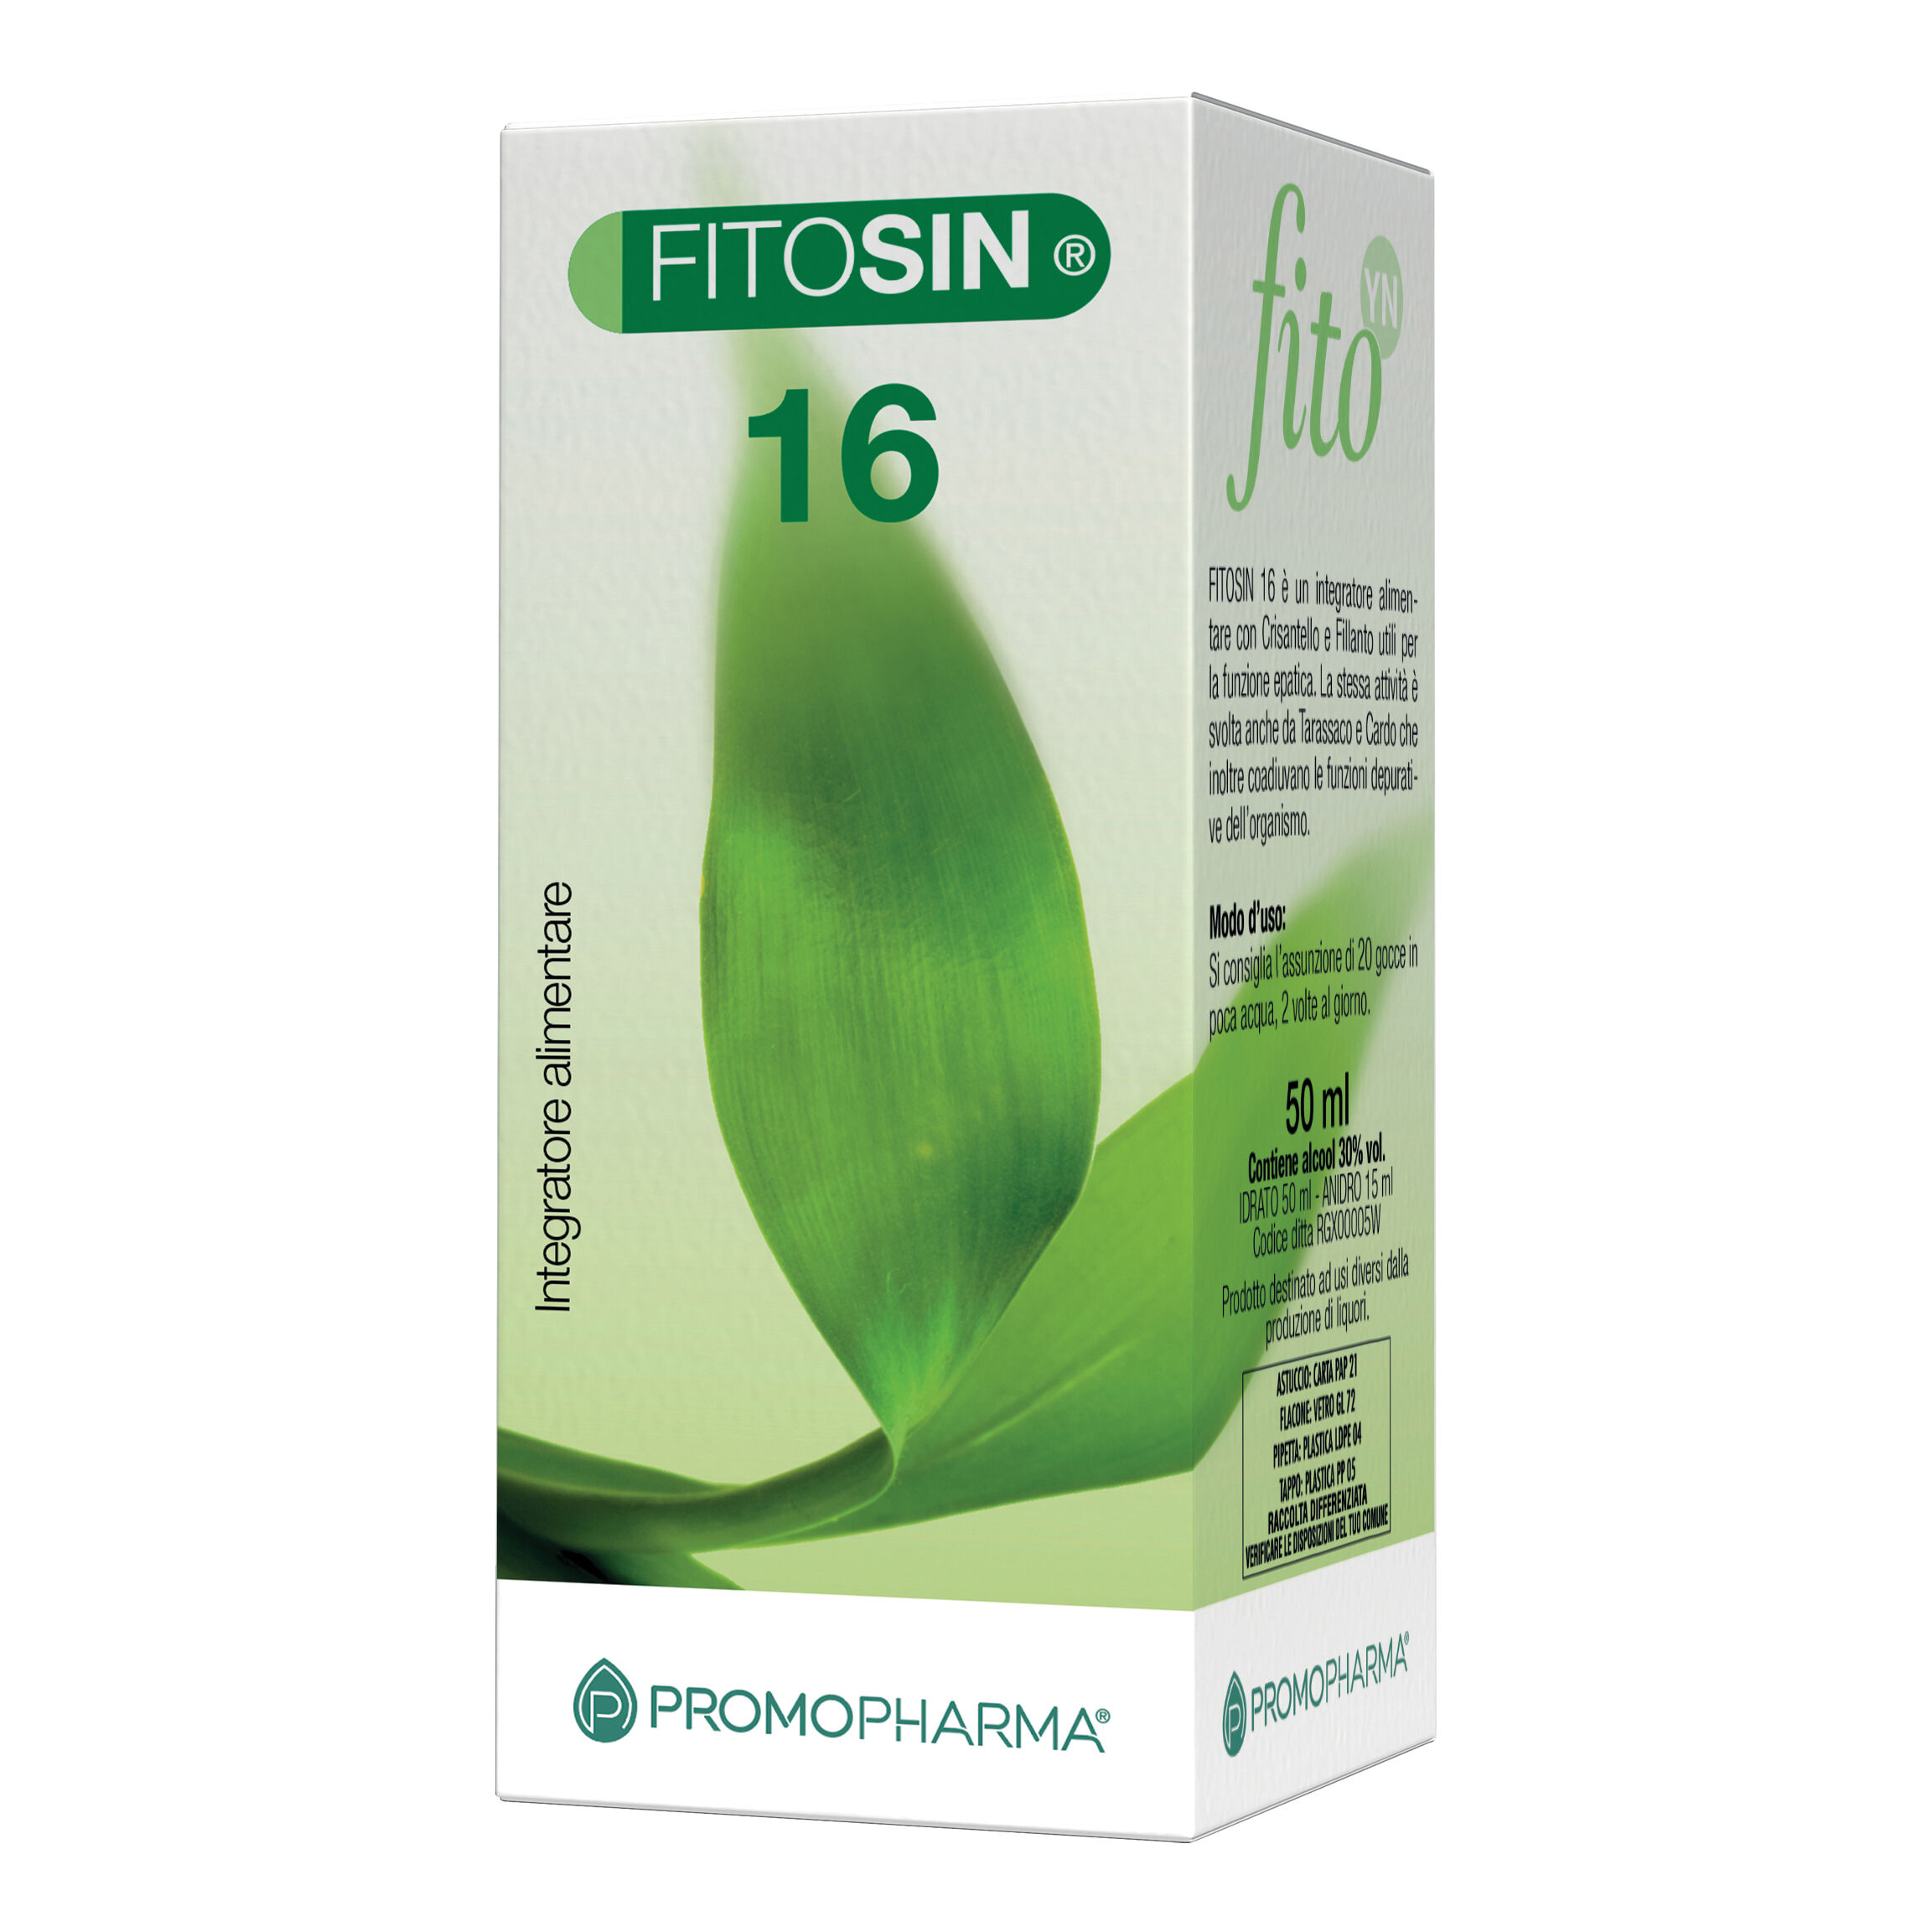 promopharma spa fitosin 16 gocce 50 ml